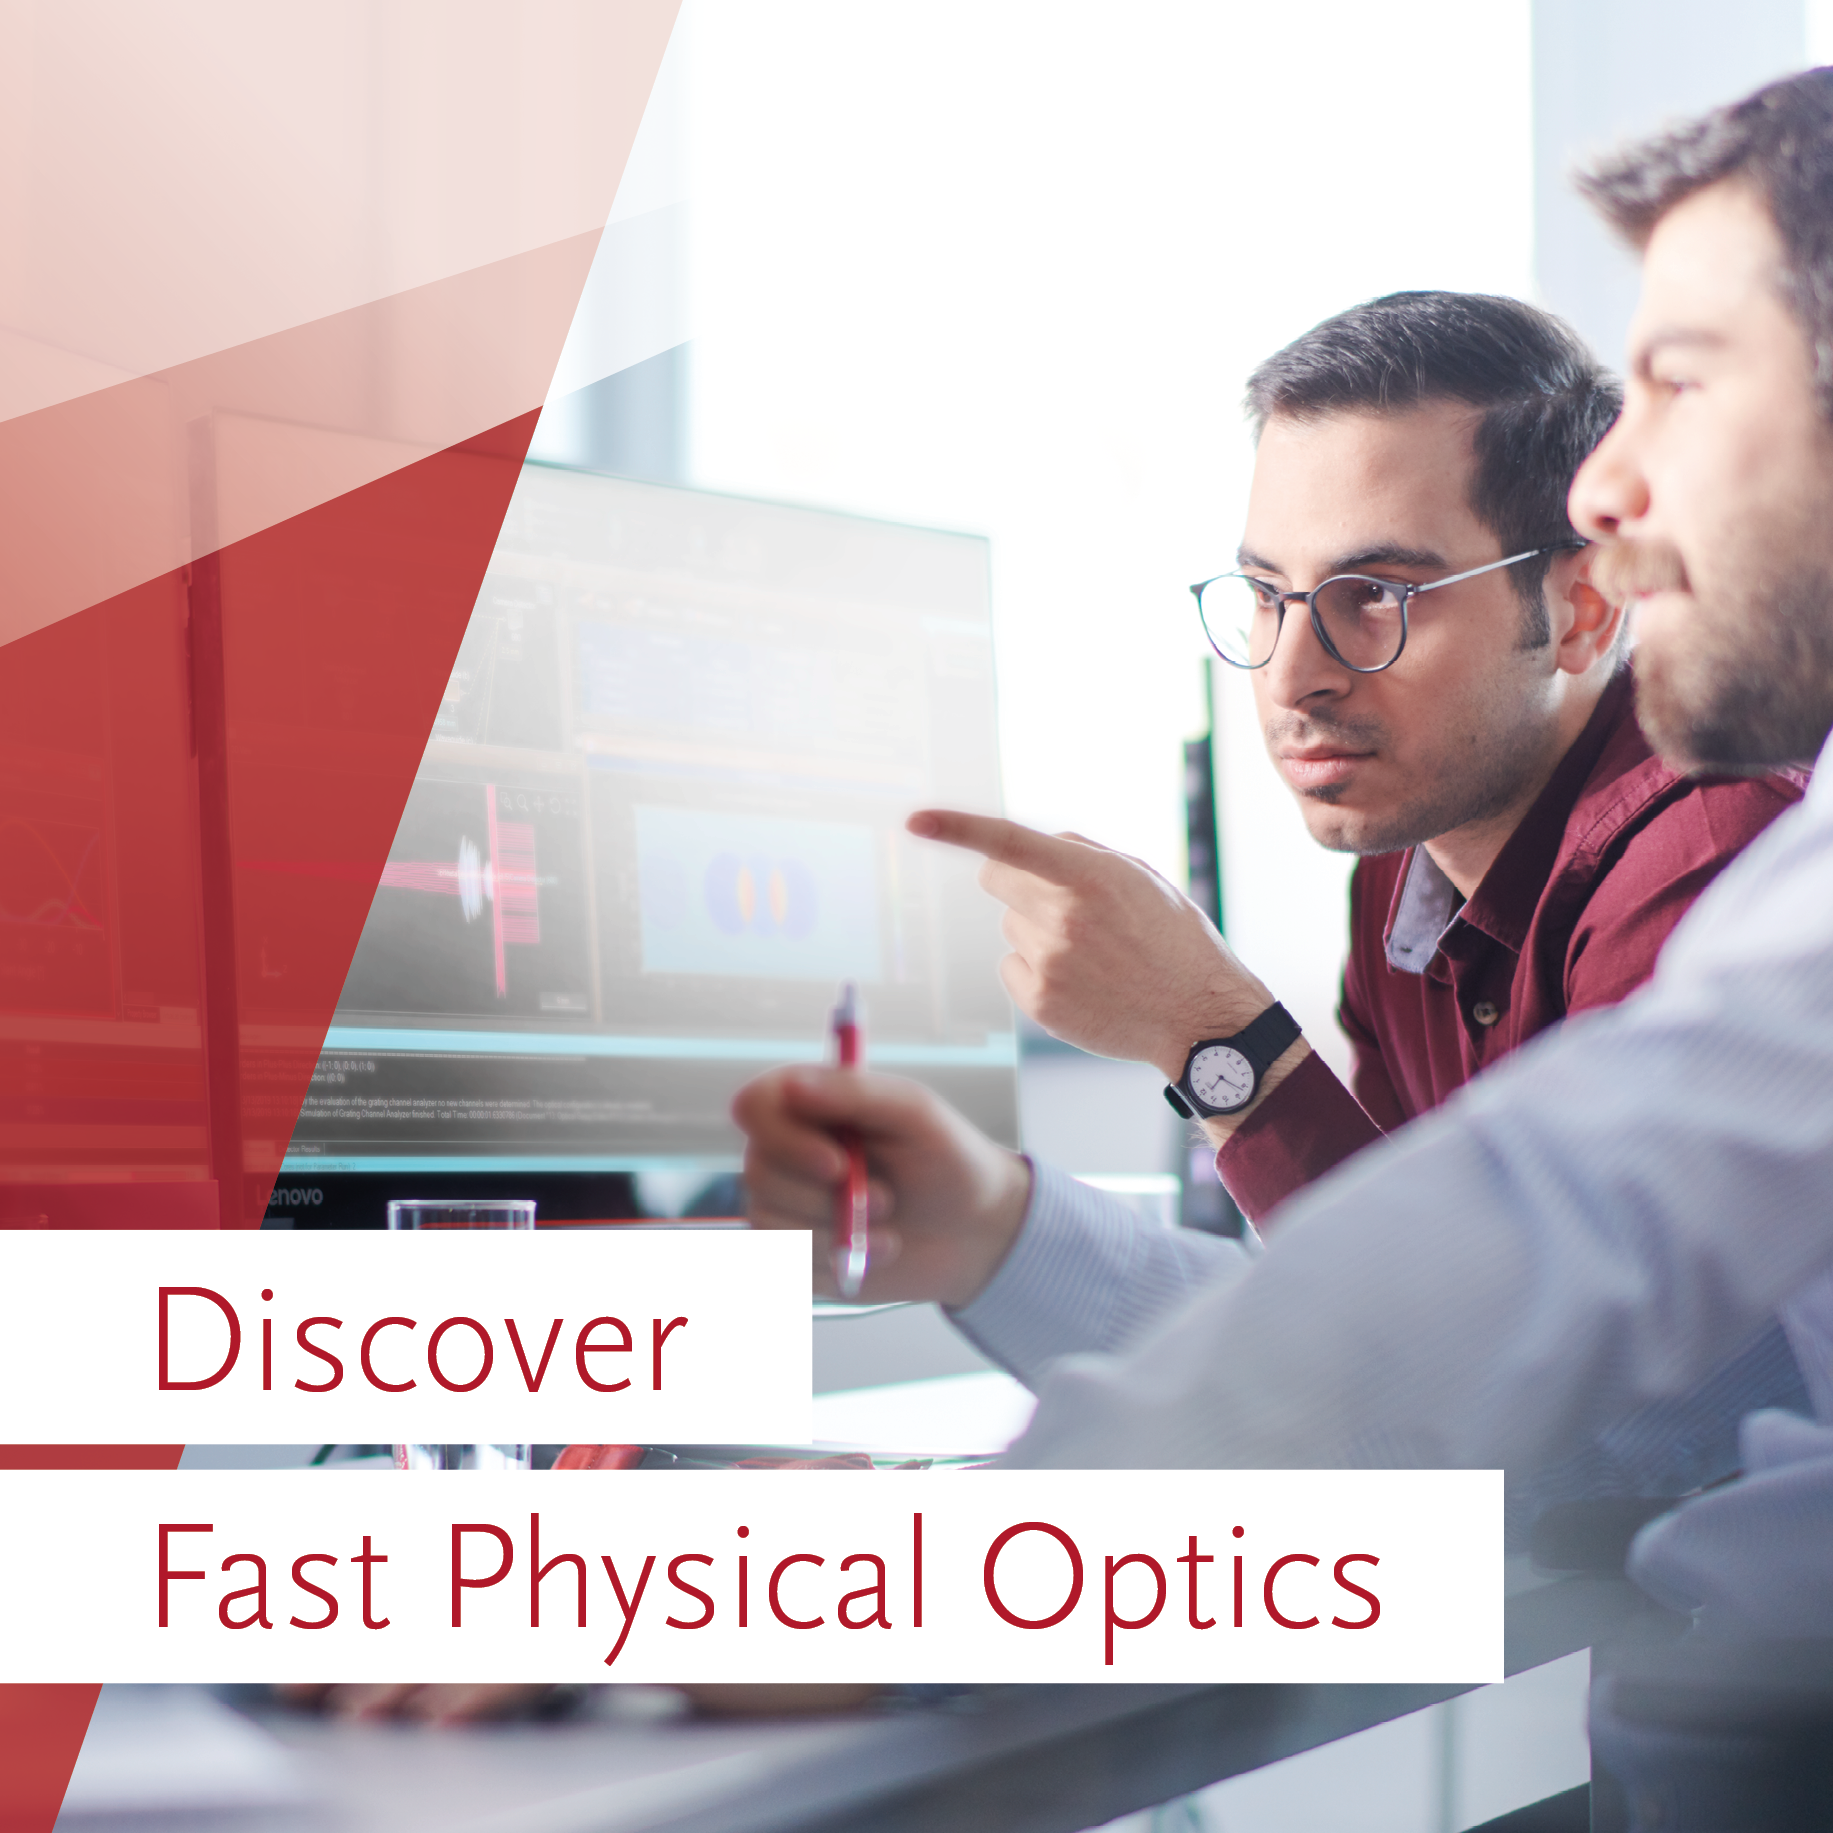 Discover Fast Physical Optics from LightTrans International UG